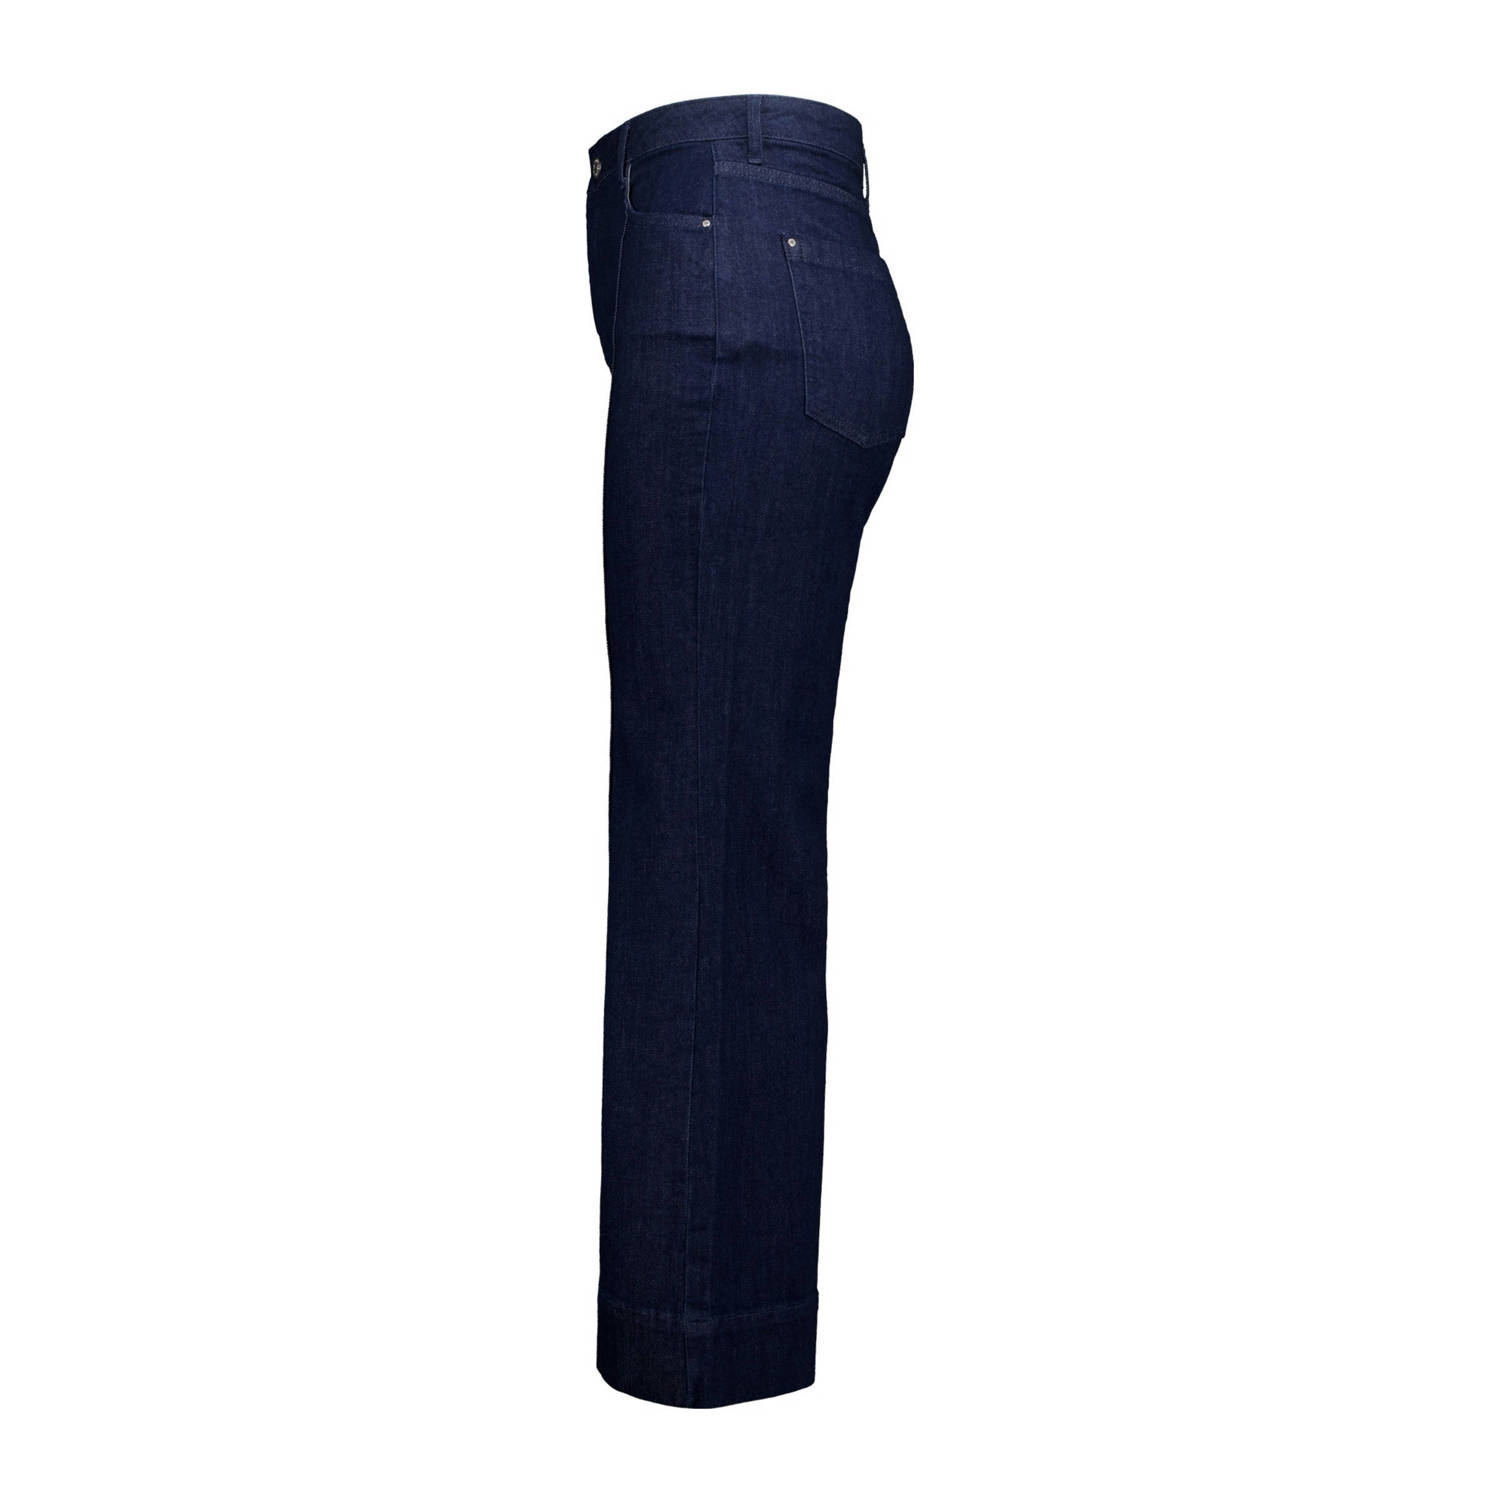 MS Mode flared jeans dark blue denim